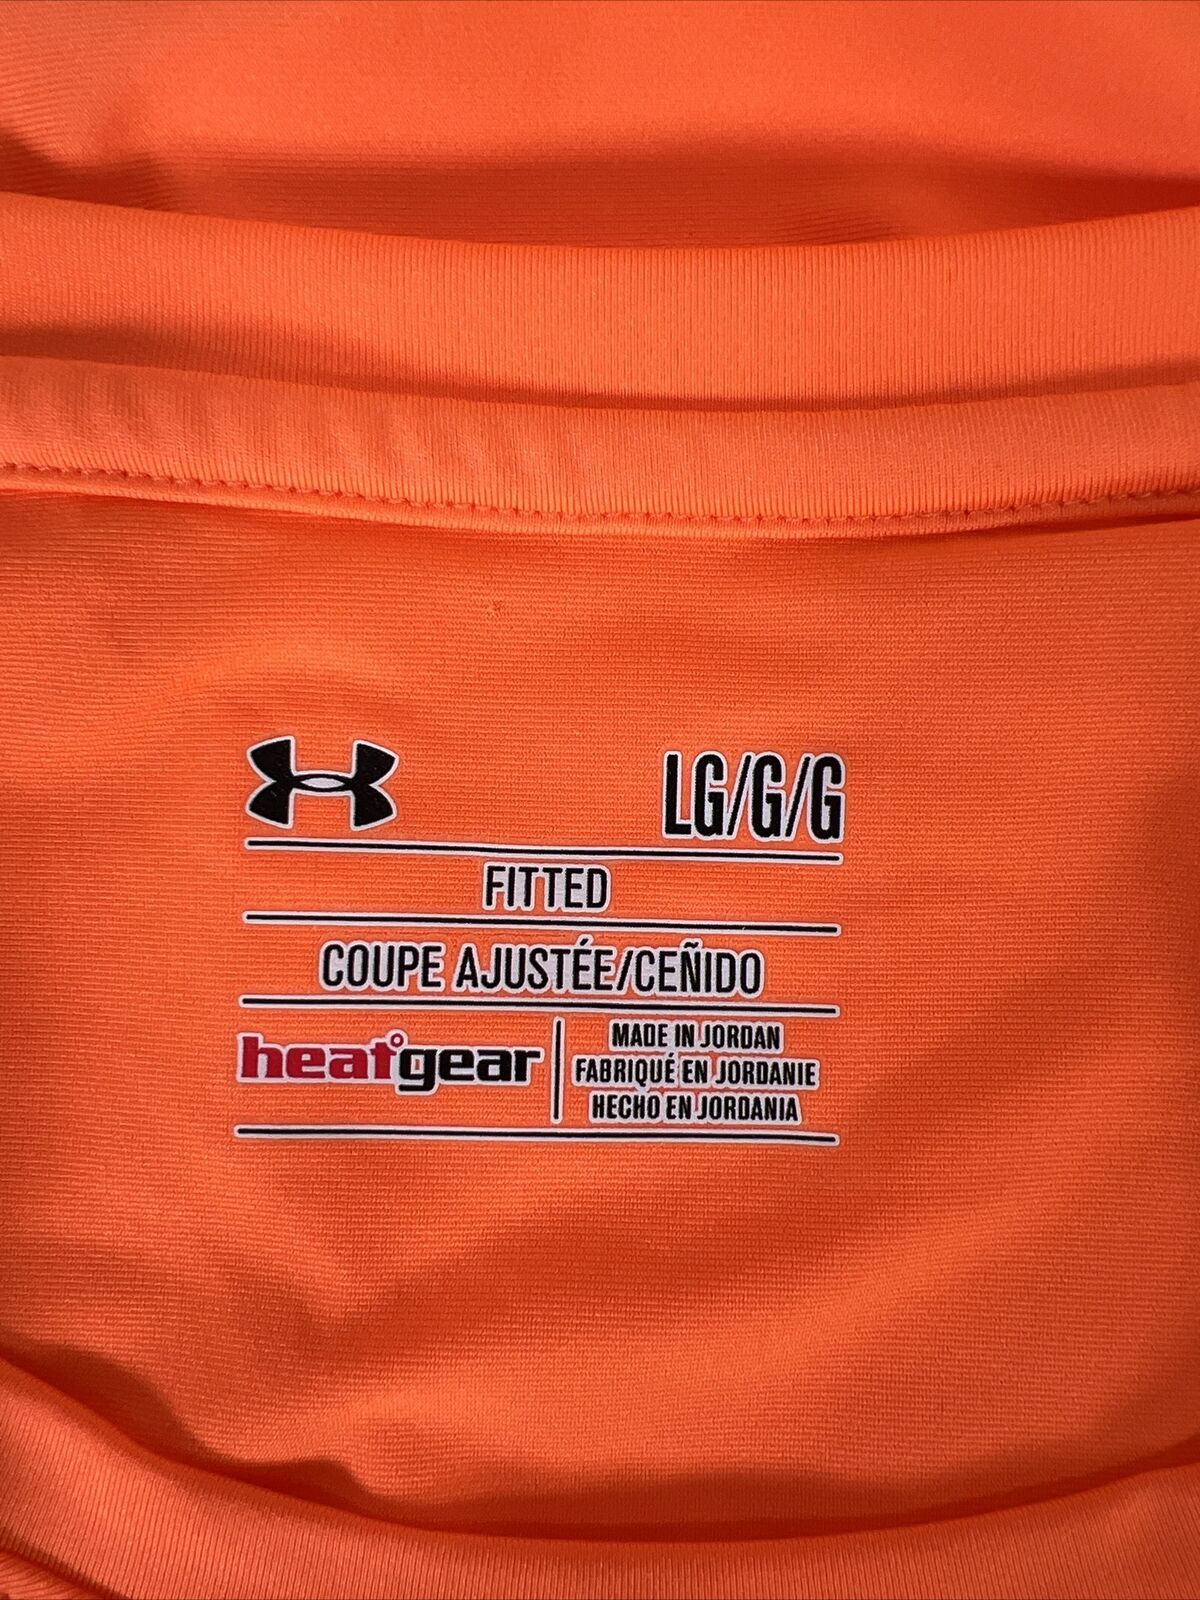 Under Armour Women's Bright Orange HeatGear Fitted Athletic Shirt - L